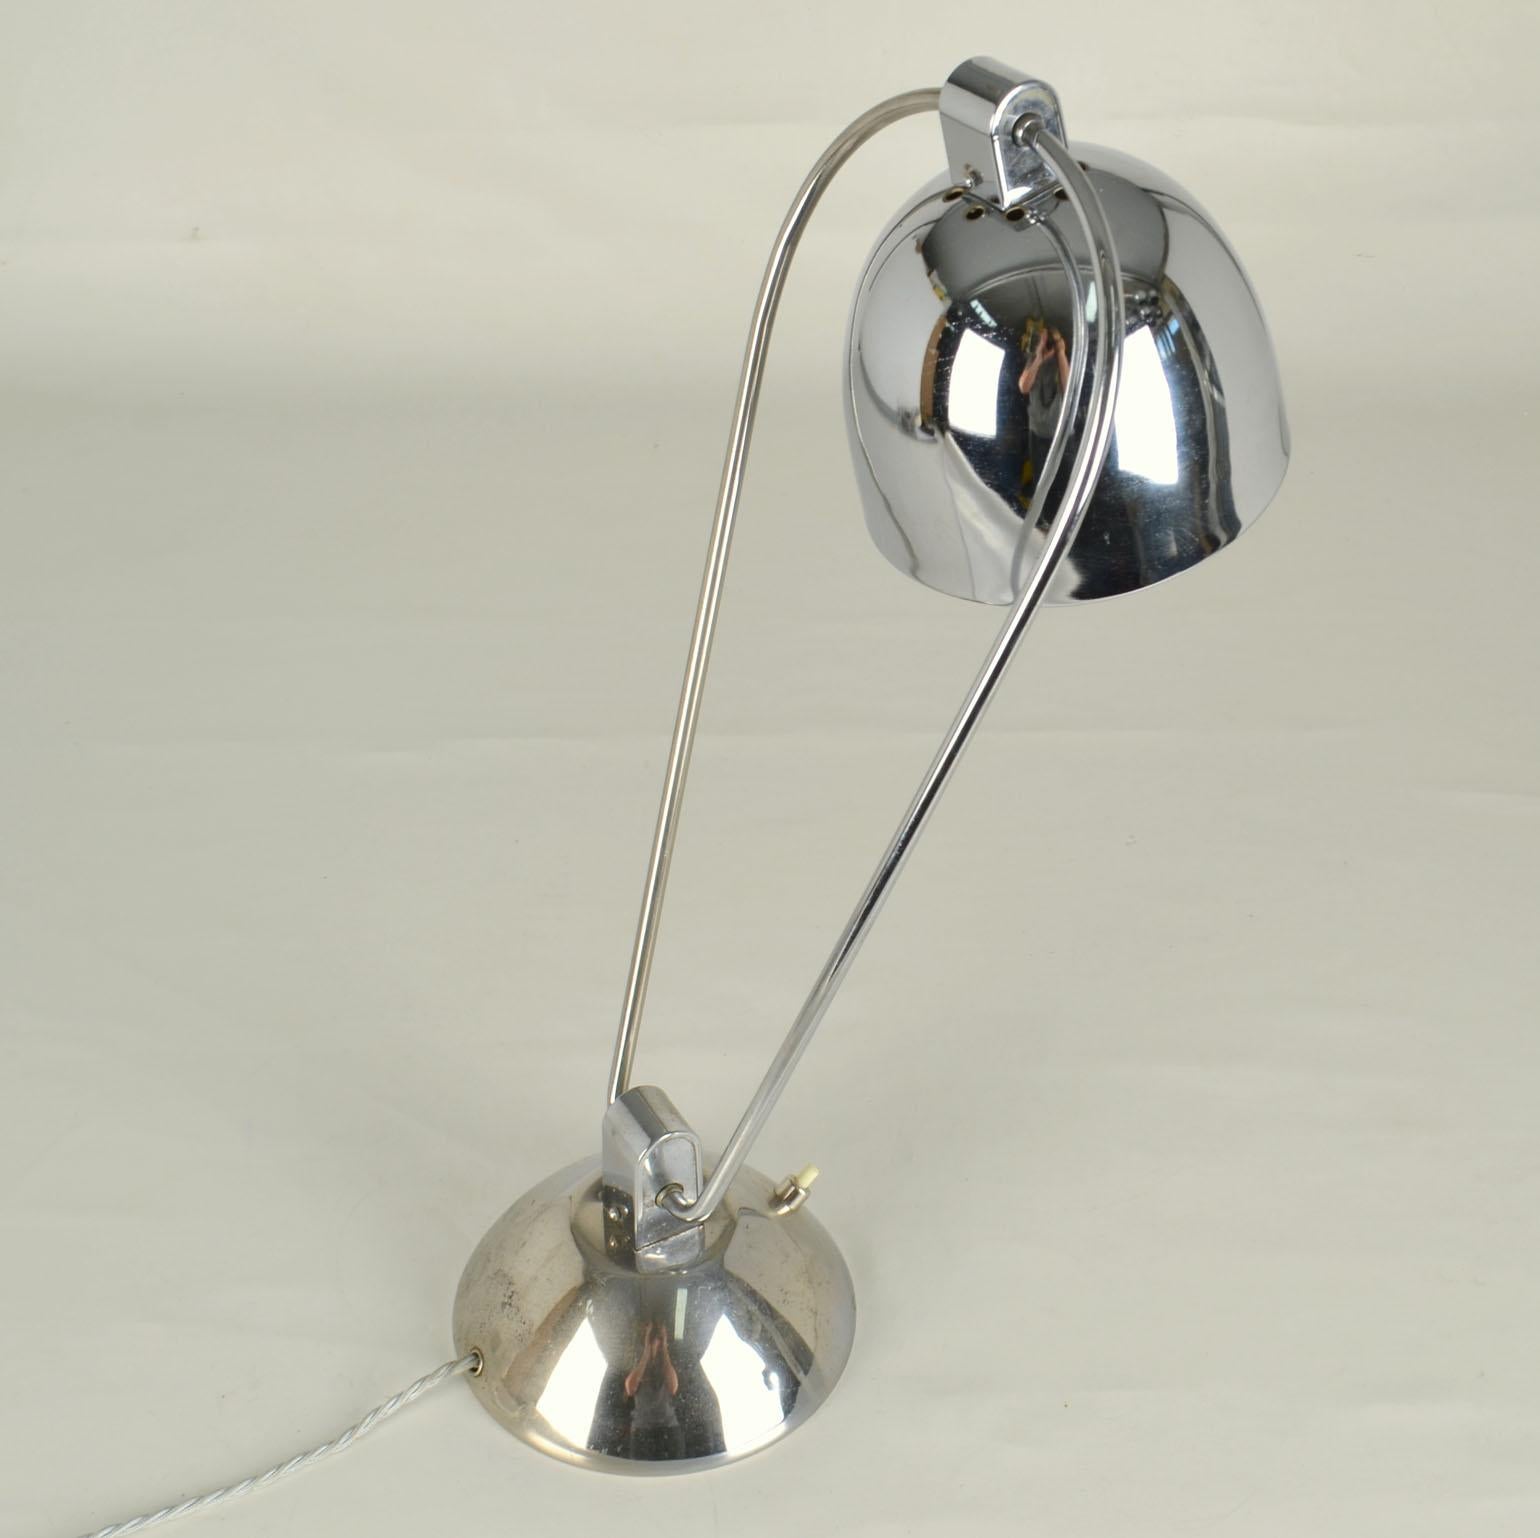  Modernist Desk Lamp Jumo designed by Yves Jujeau and André Mounique For Sale 7